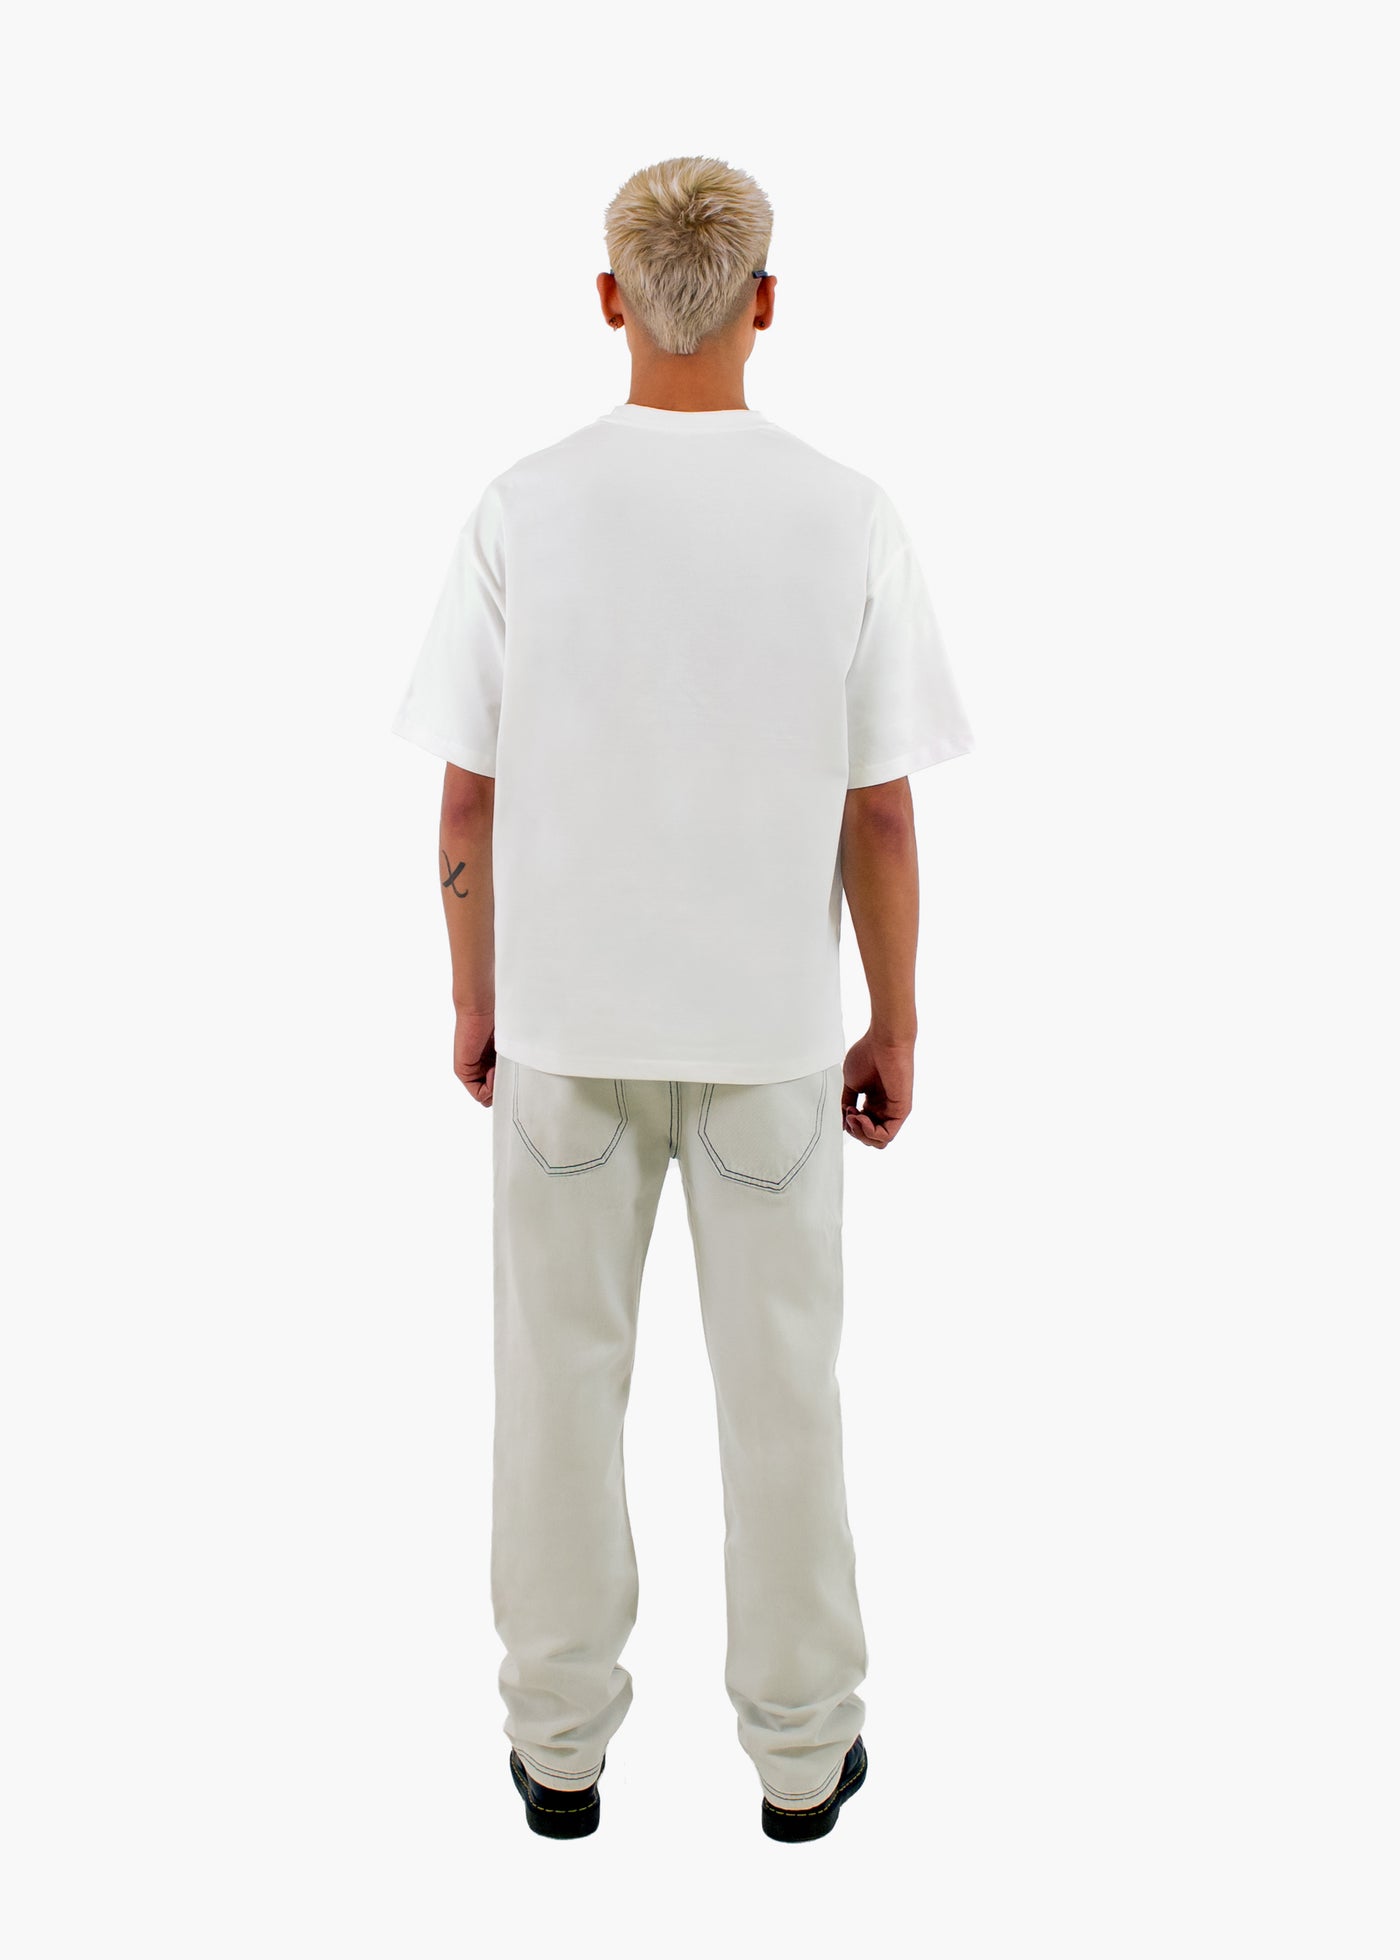 White oversized t-shirt